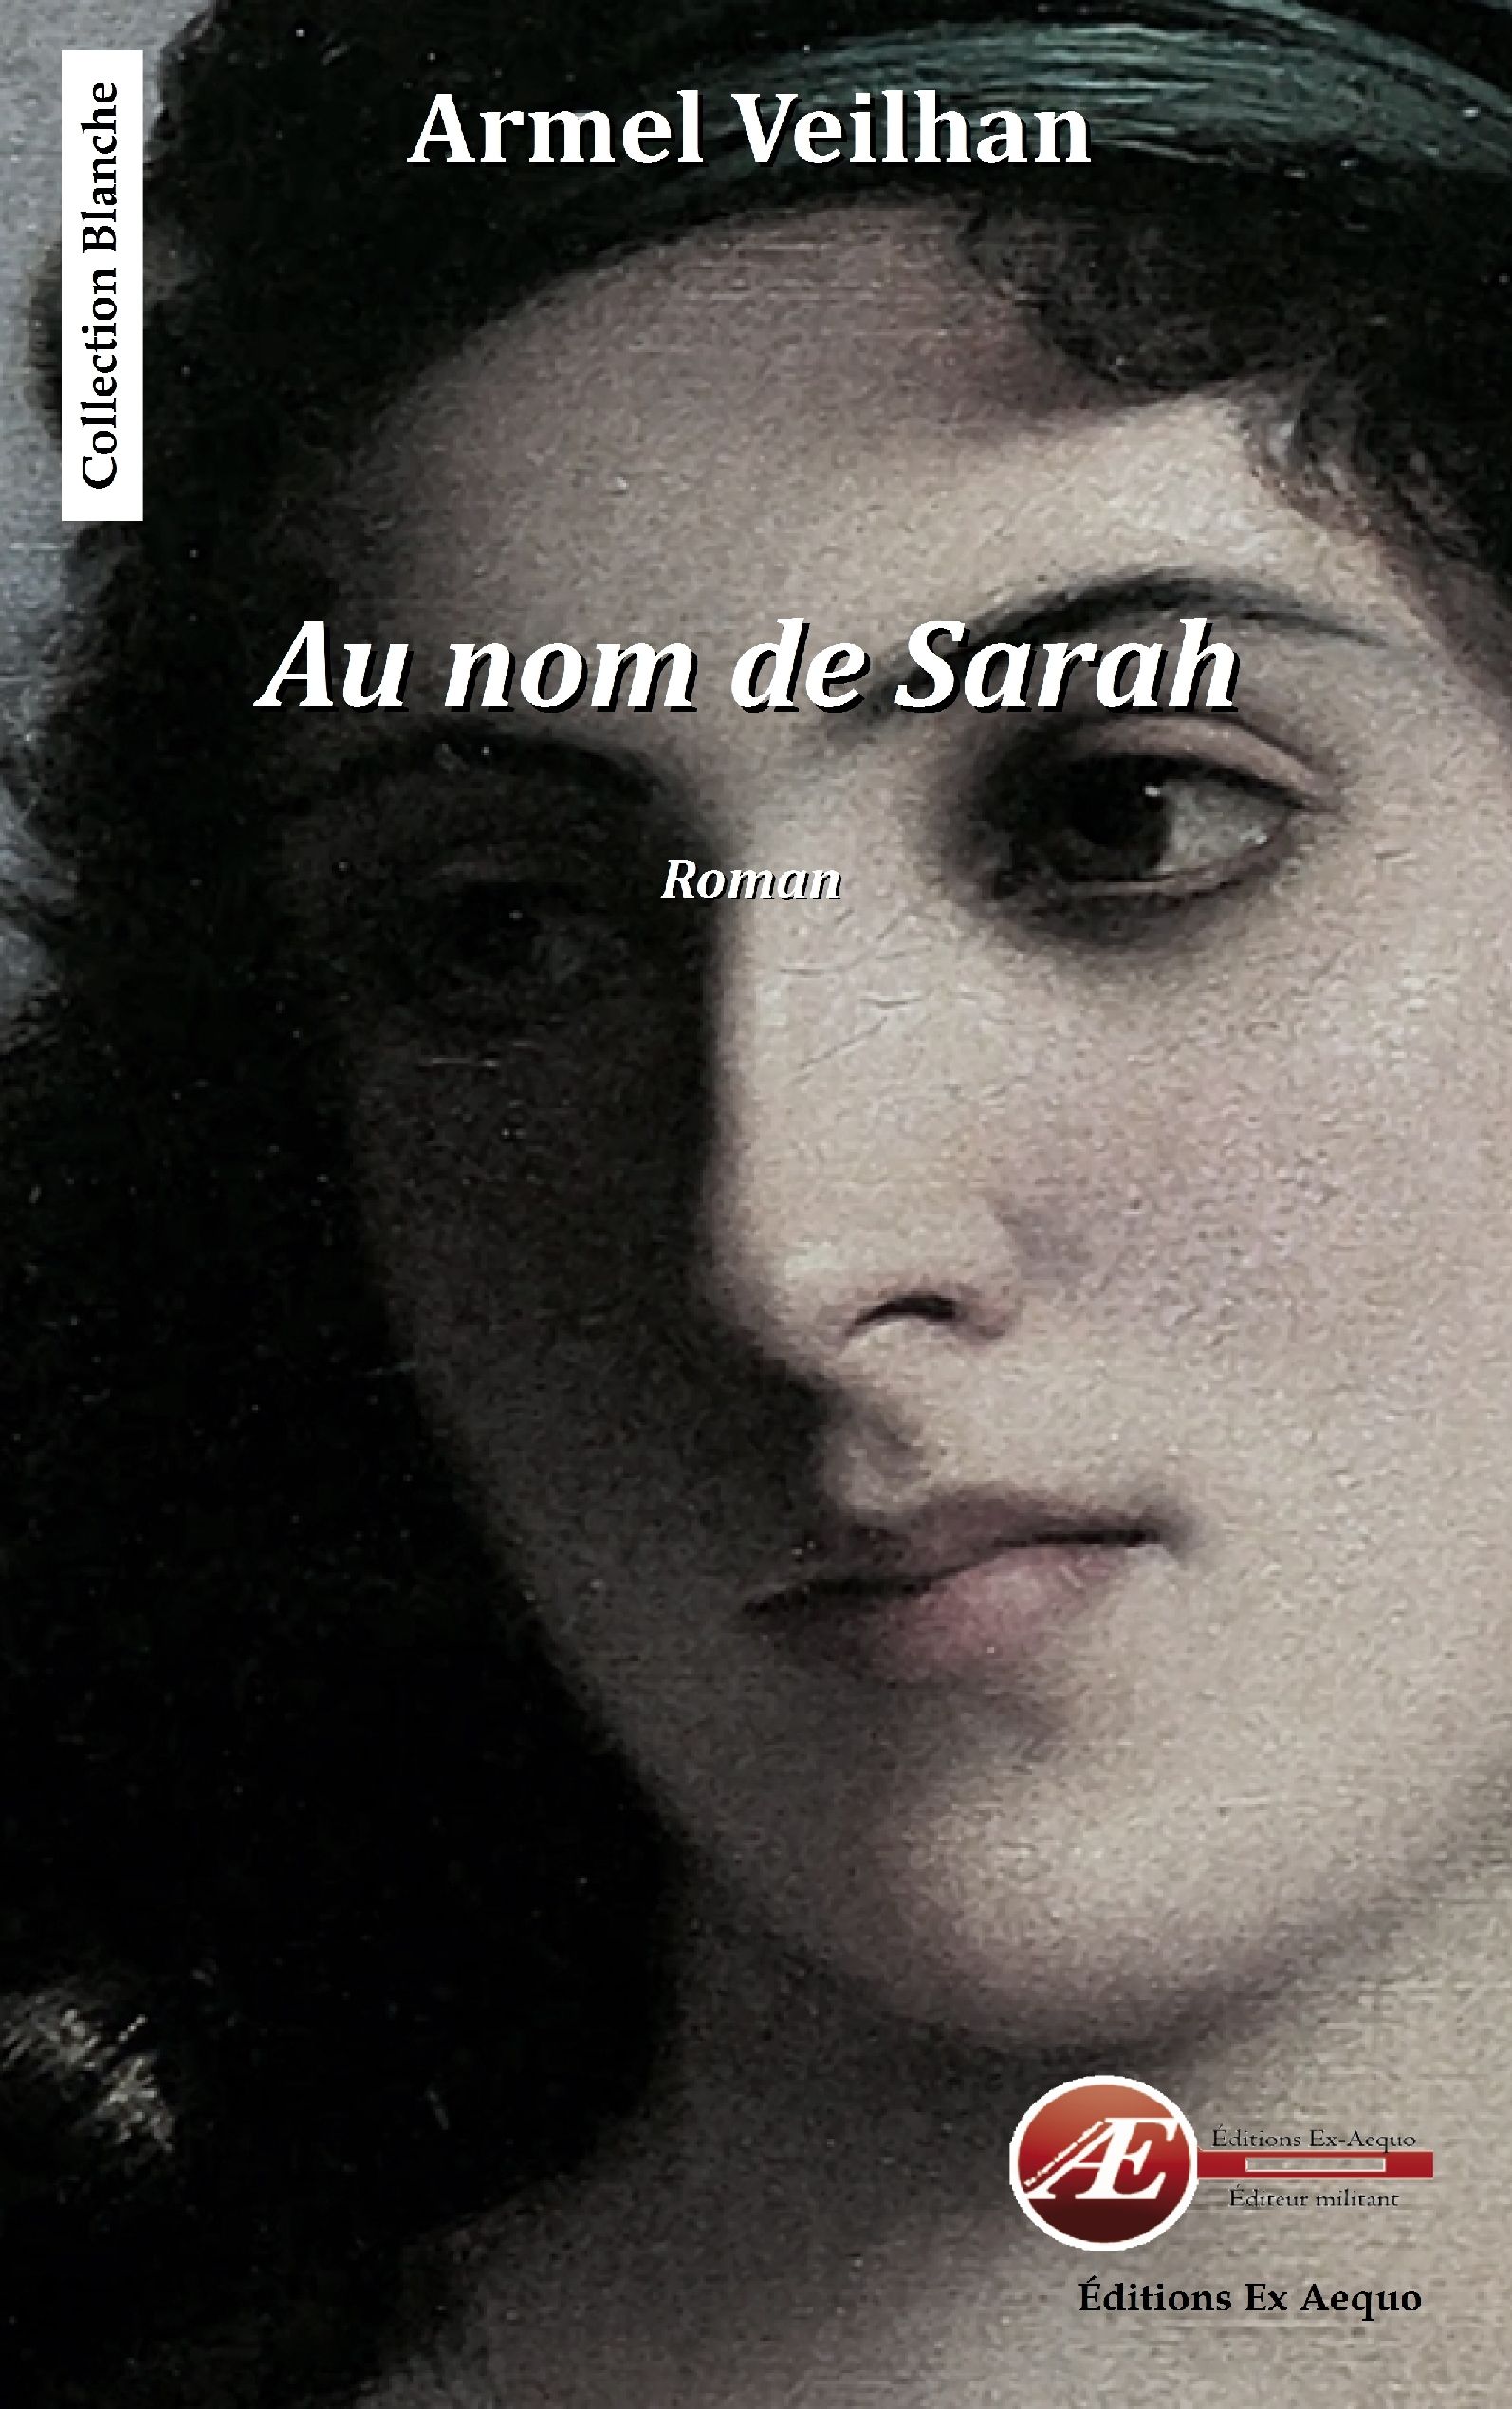 You are currently viewing Au nom de Sarah, d’Armel Veilhan